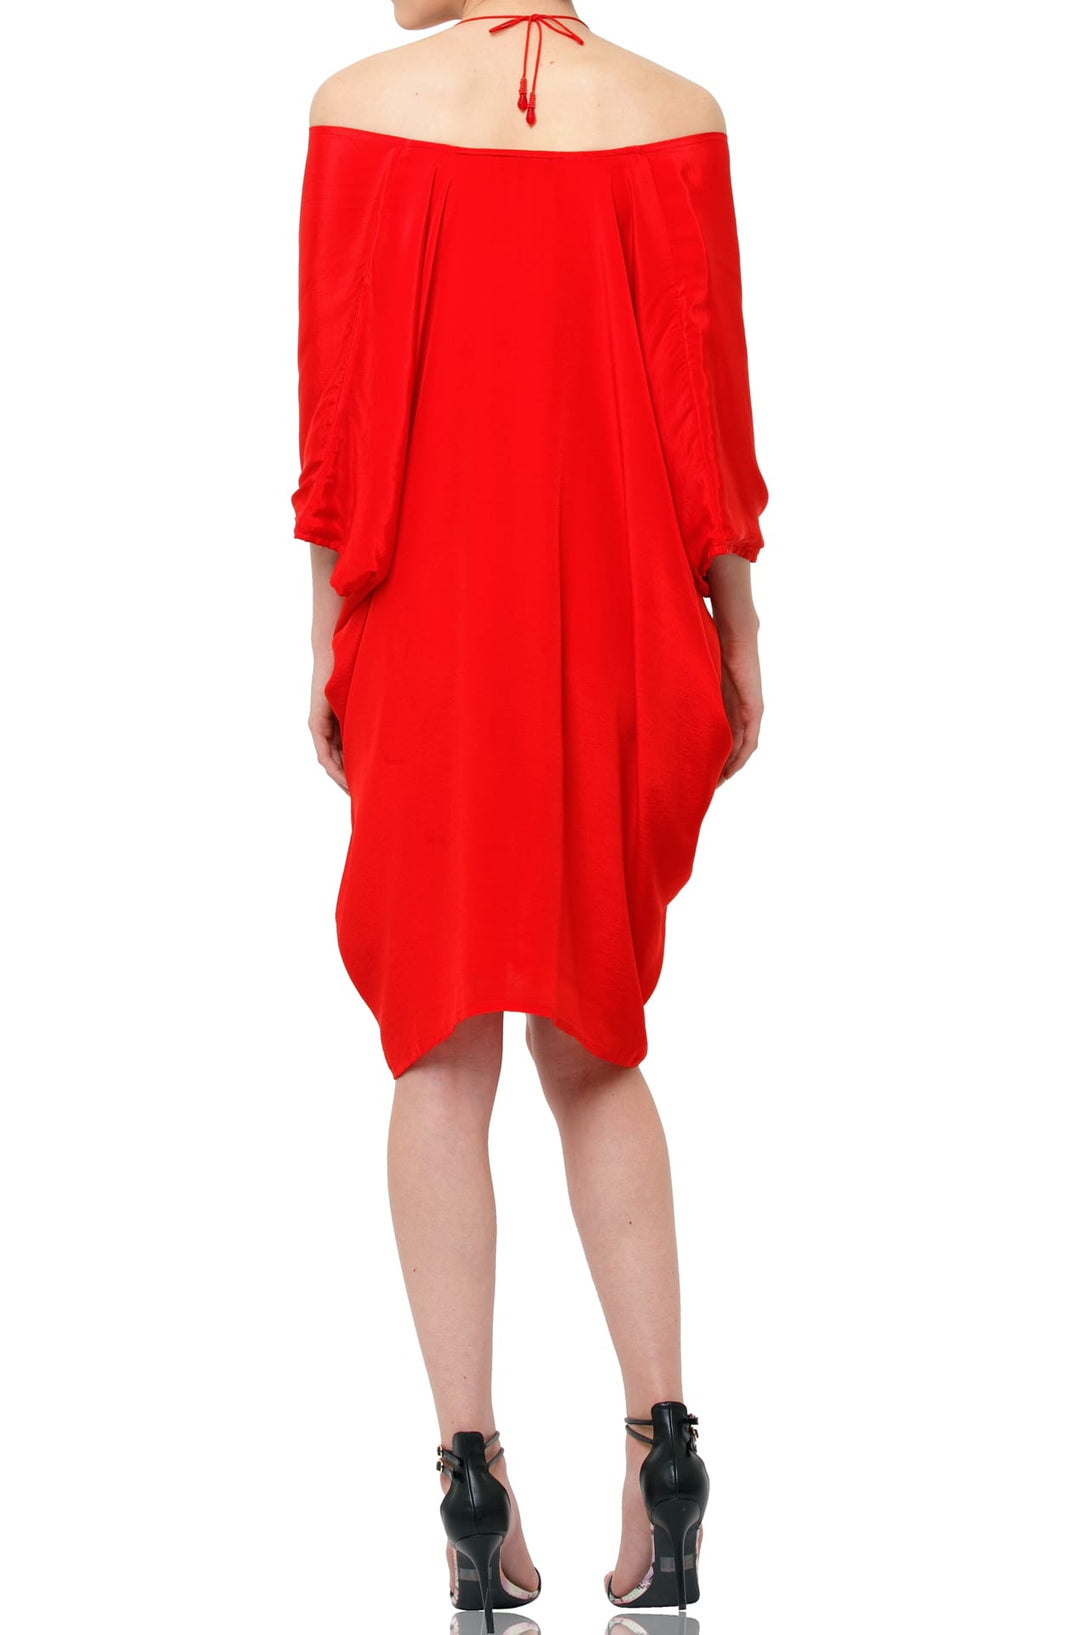 long sleeve mini red dress, luxury kaftan, Shahida Parides, sleeveless mini dress, sexy short dresses,